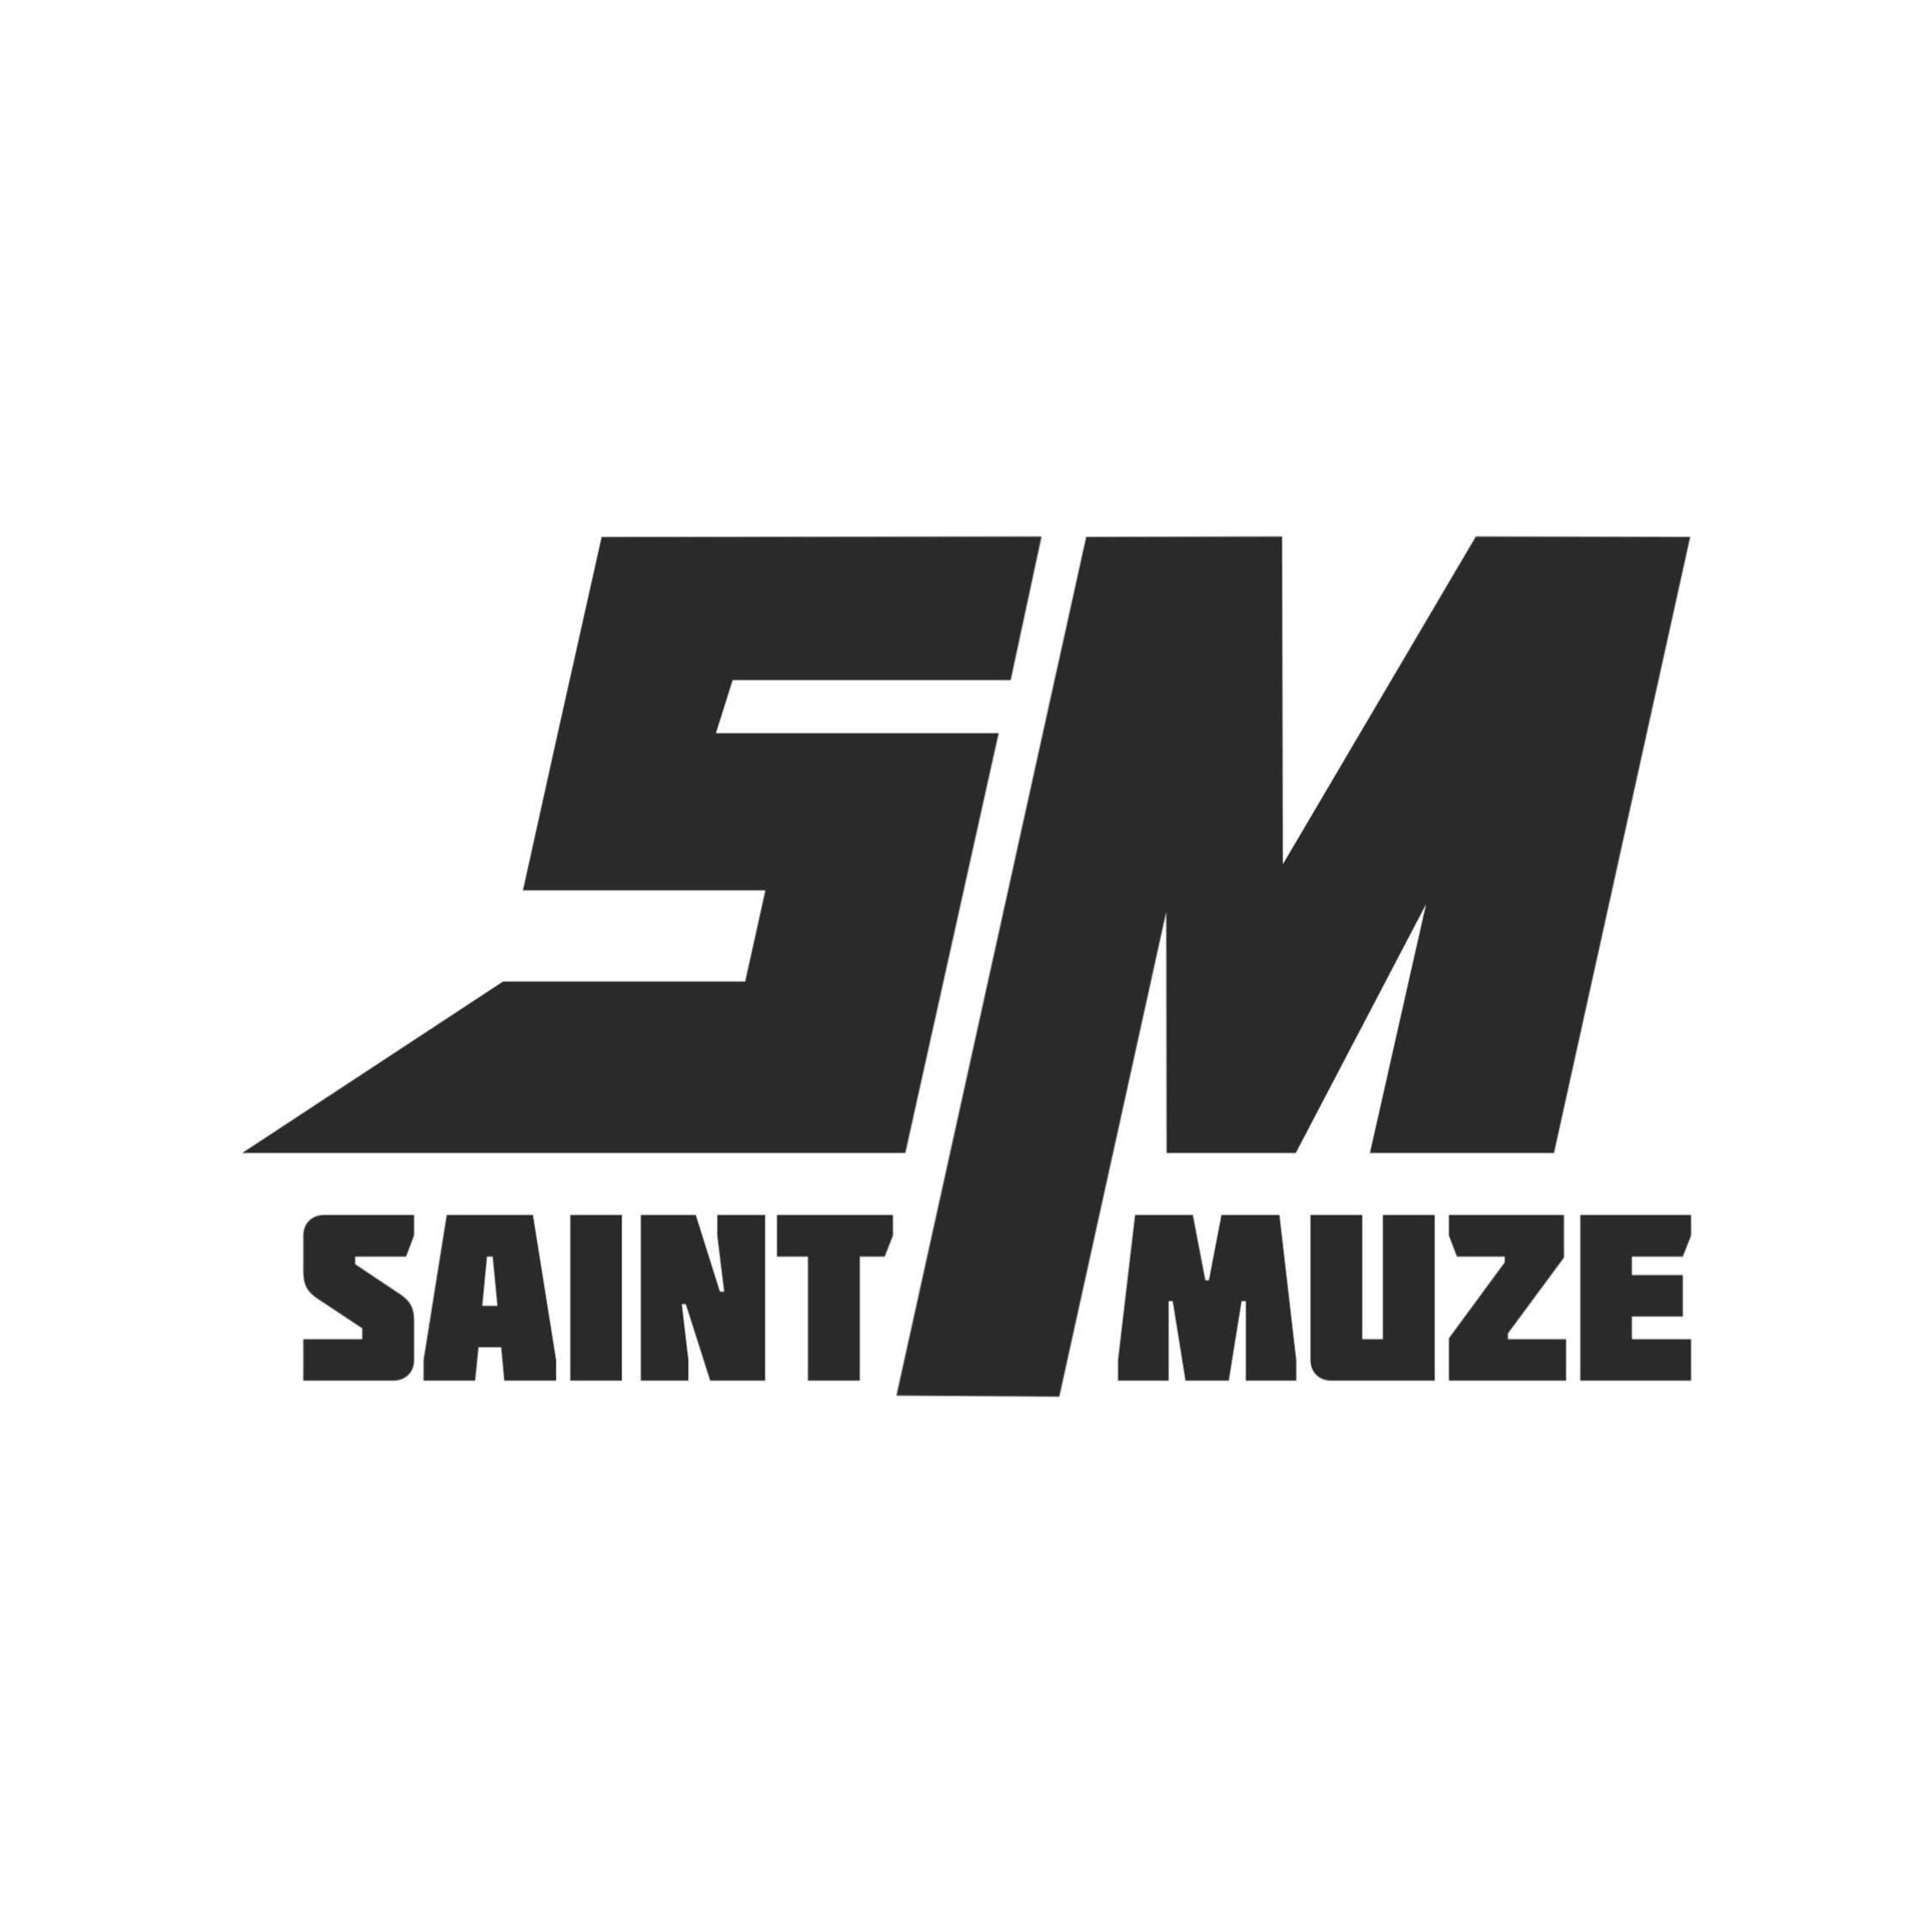 Saint Muze